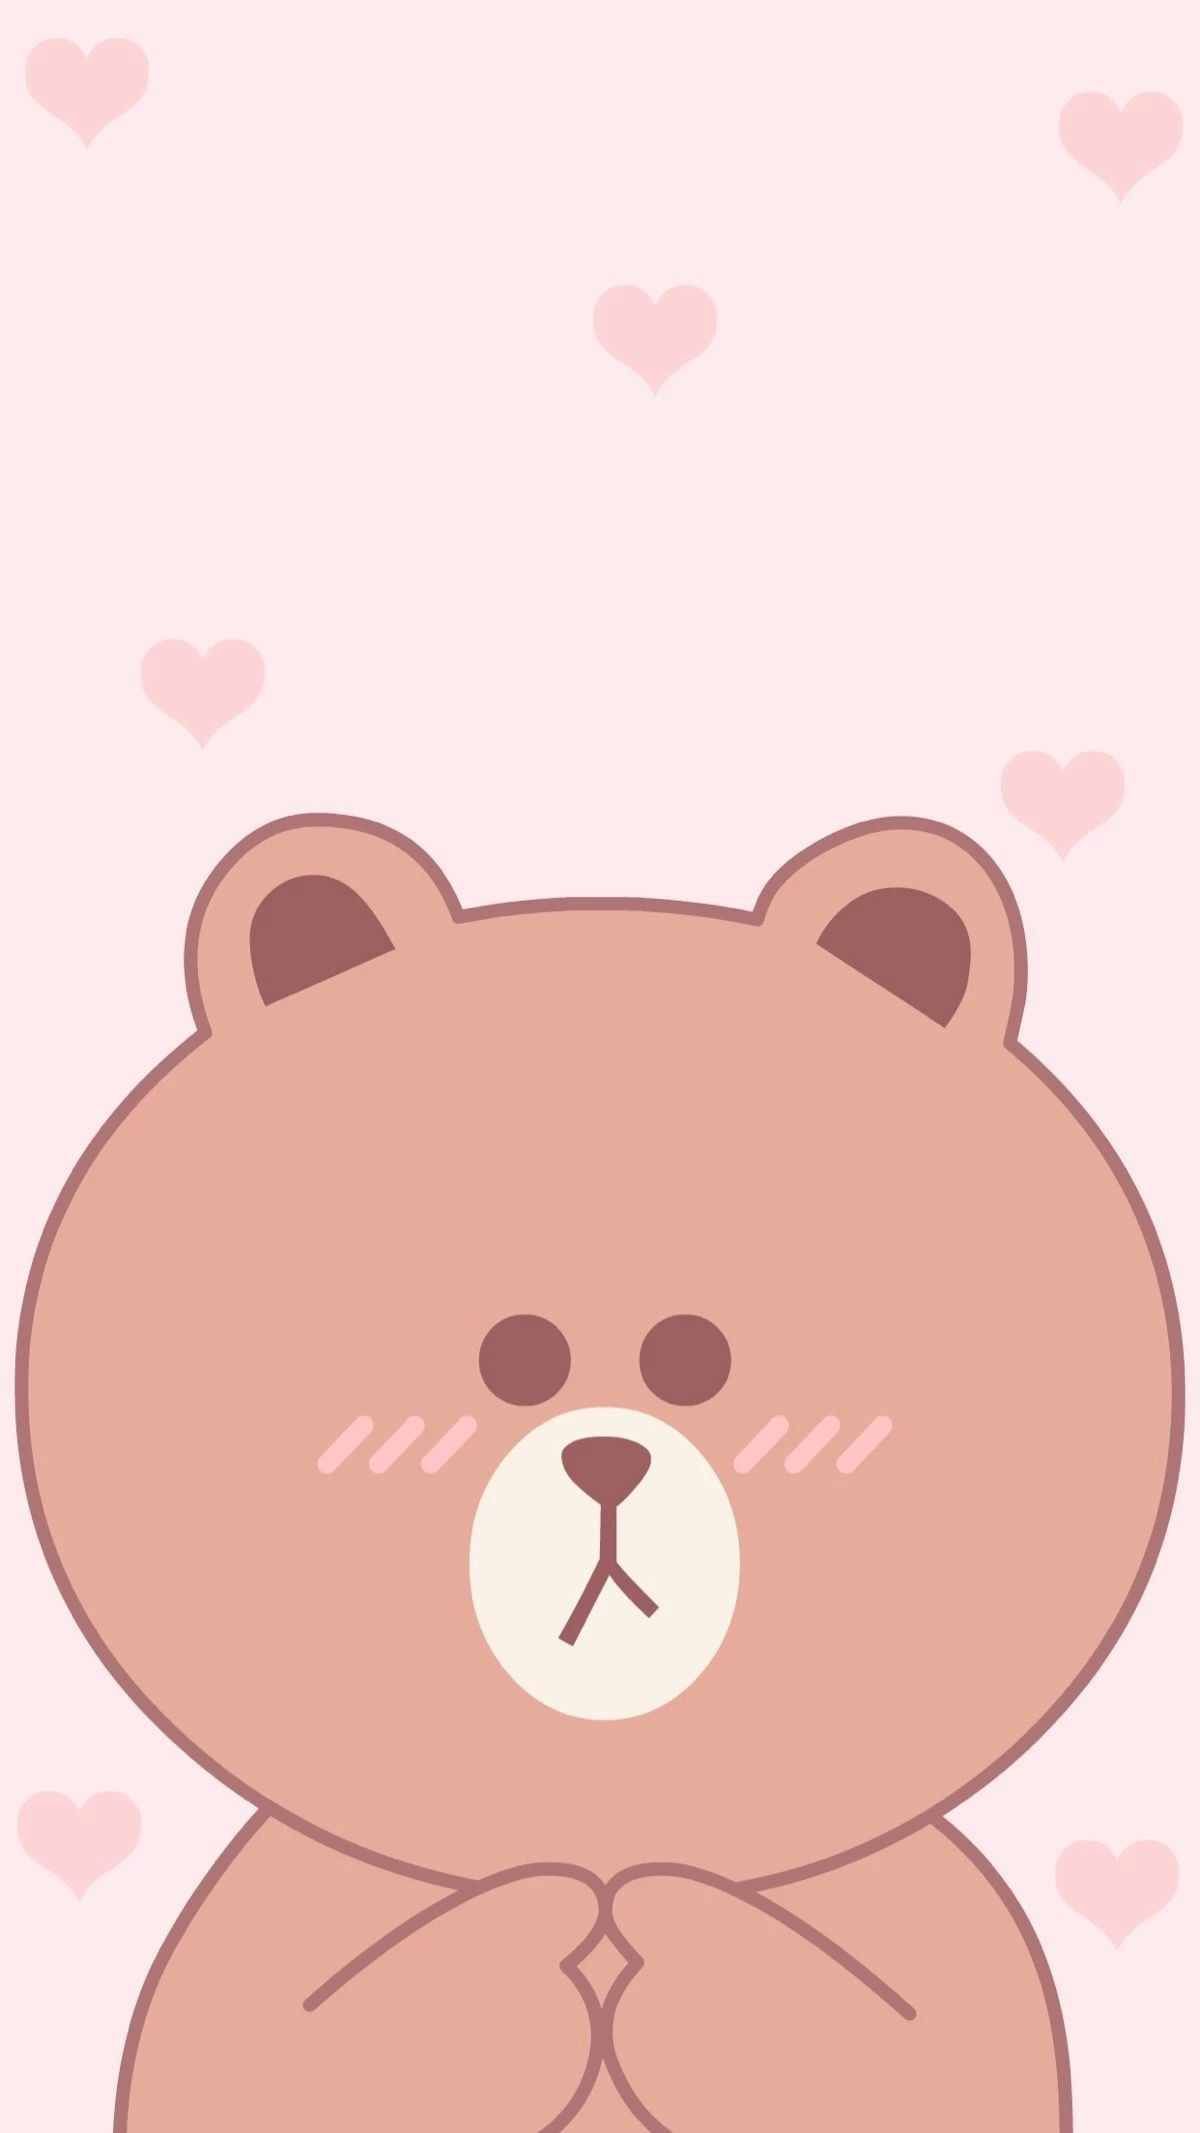 Cute Bears IPhone Wallpaper HD IPhone Wallpapers Wallpaper Download  MOONAZ